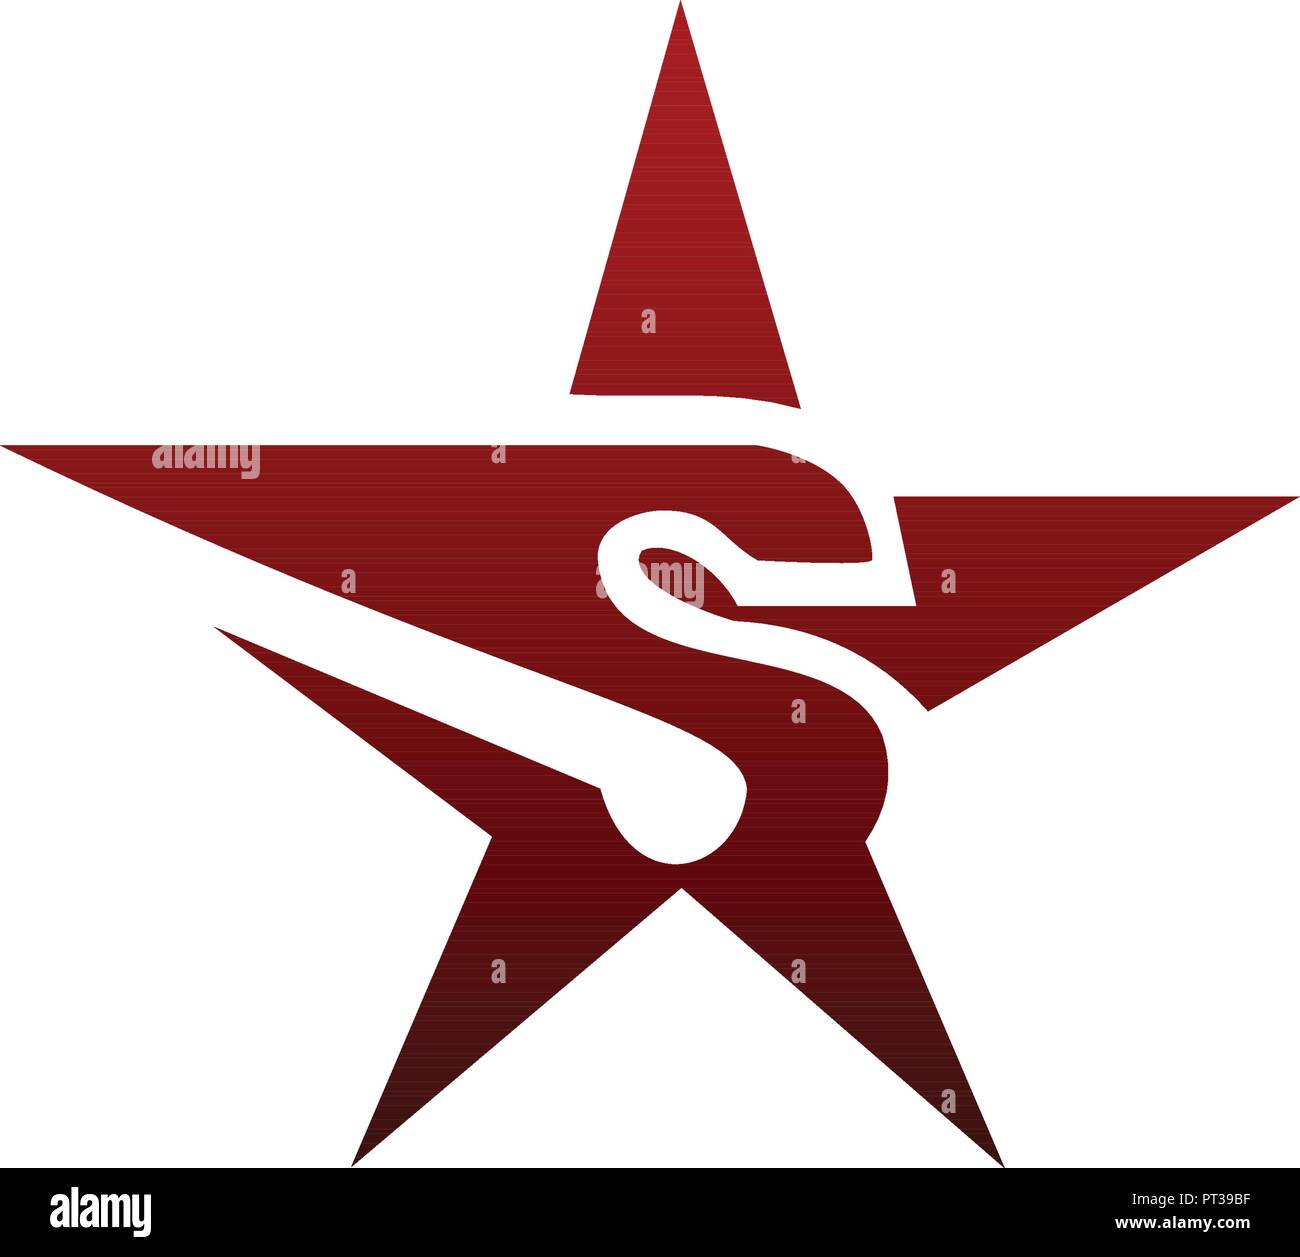 Buchstabe S Star Logo Design Konzept Vorlage Stock Vektor